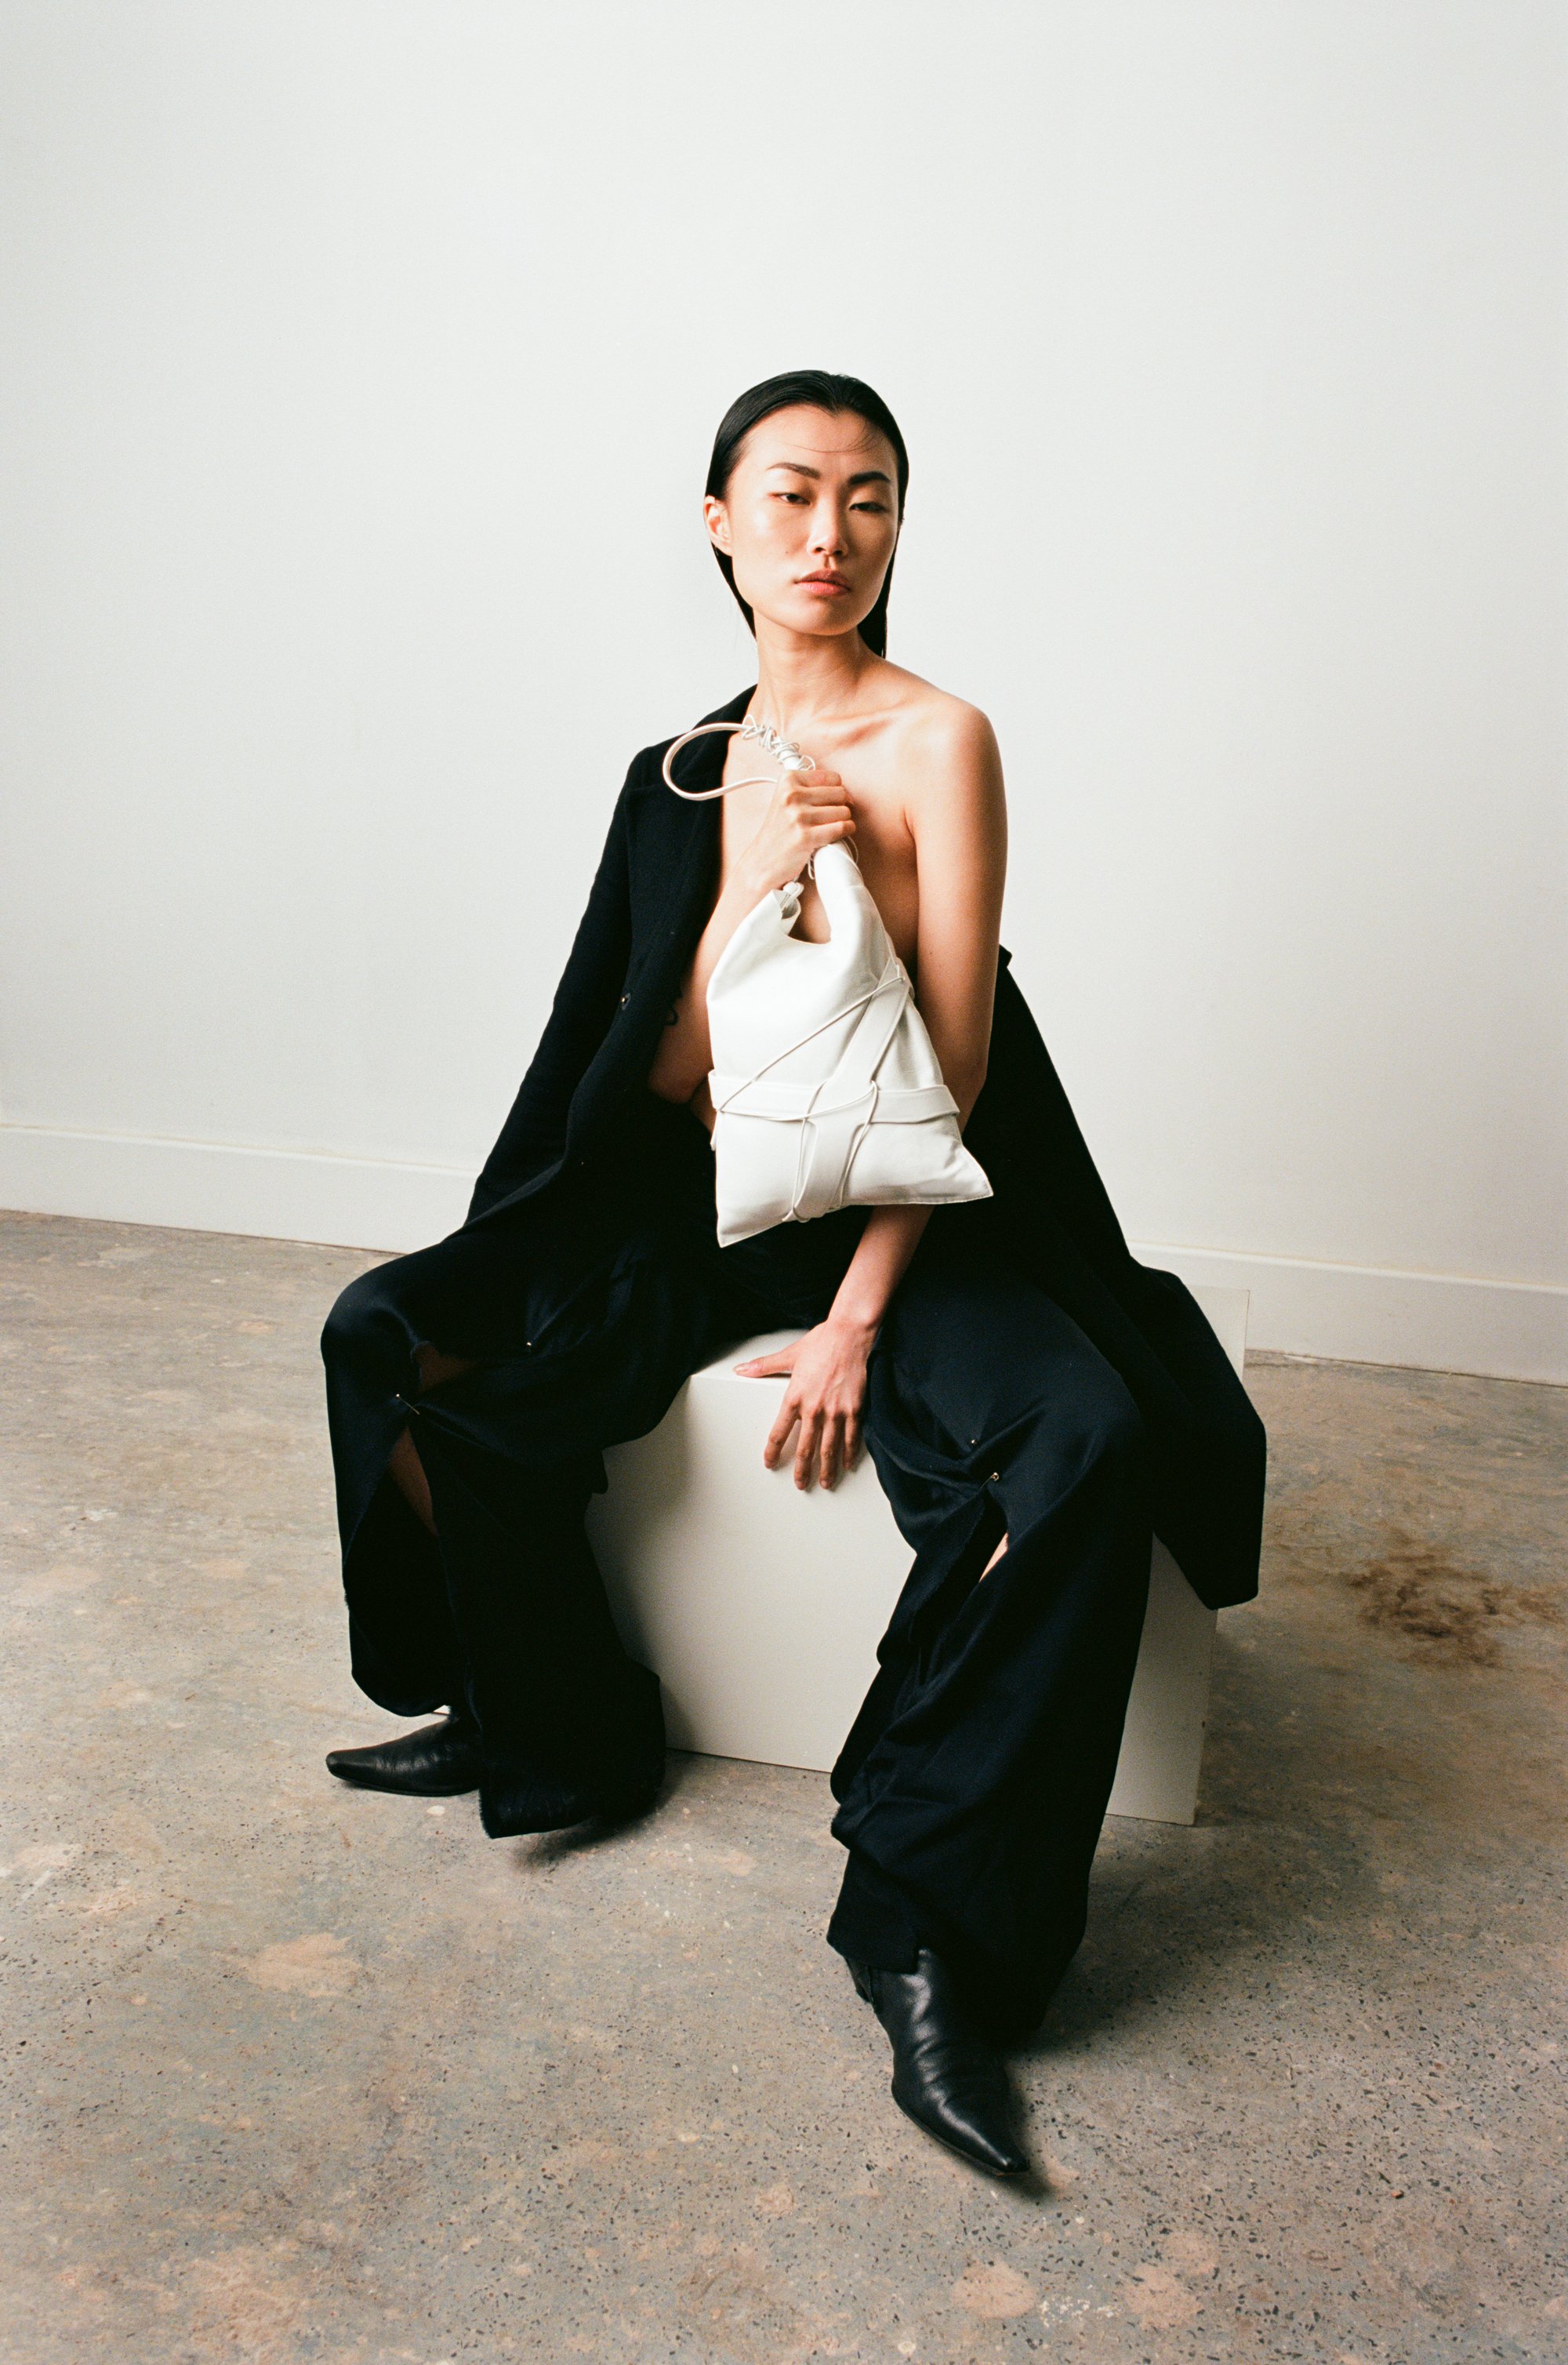 Kikiito-houseofito-sanagi-white-leather-tote-handbag-bag-made-in-England-Uk-styling-craftsmanship-handmade-avantgarde-Japanese-London-accessories-minimalist-design-sustainable-slow-fashion-brand-one-of-a-kind-editorial-photoshoot-model-Po-Hsuan.jpg